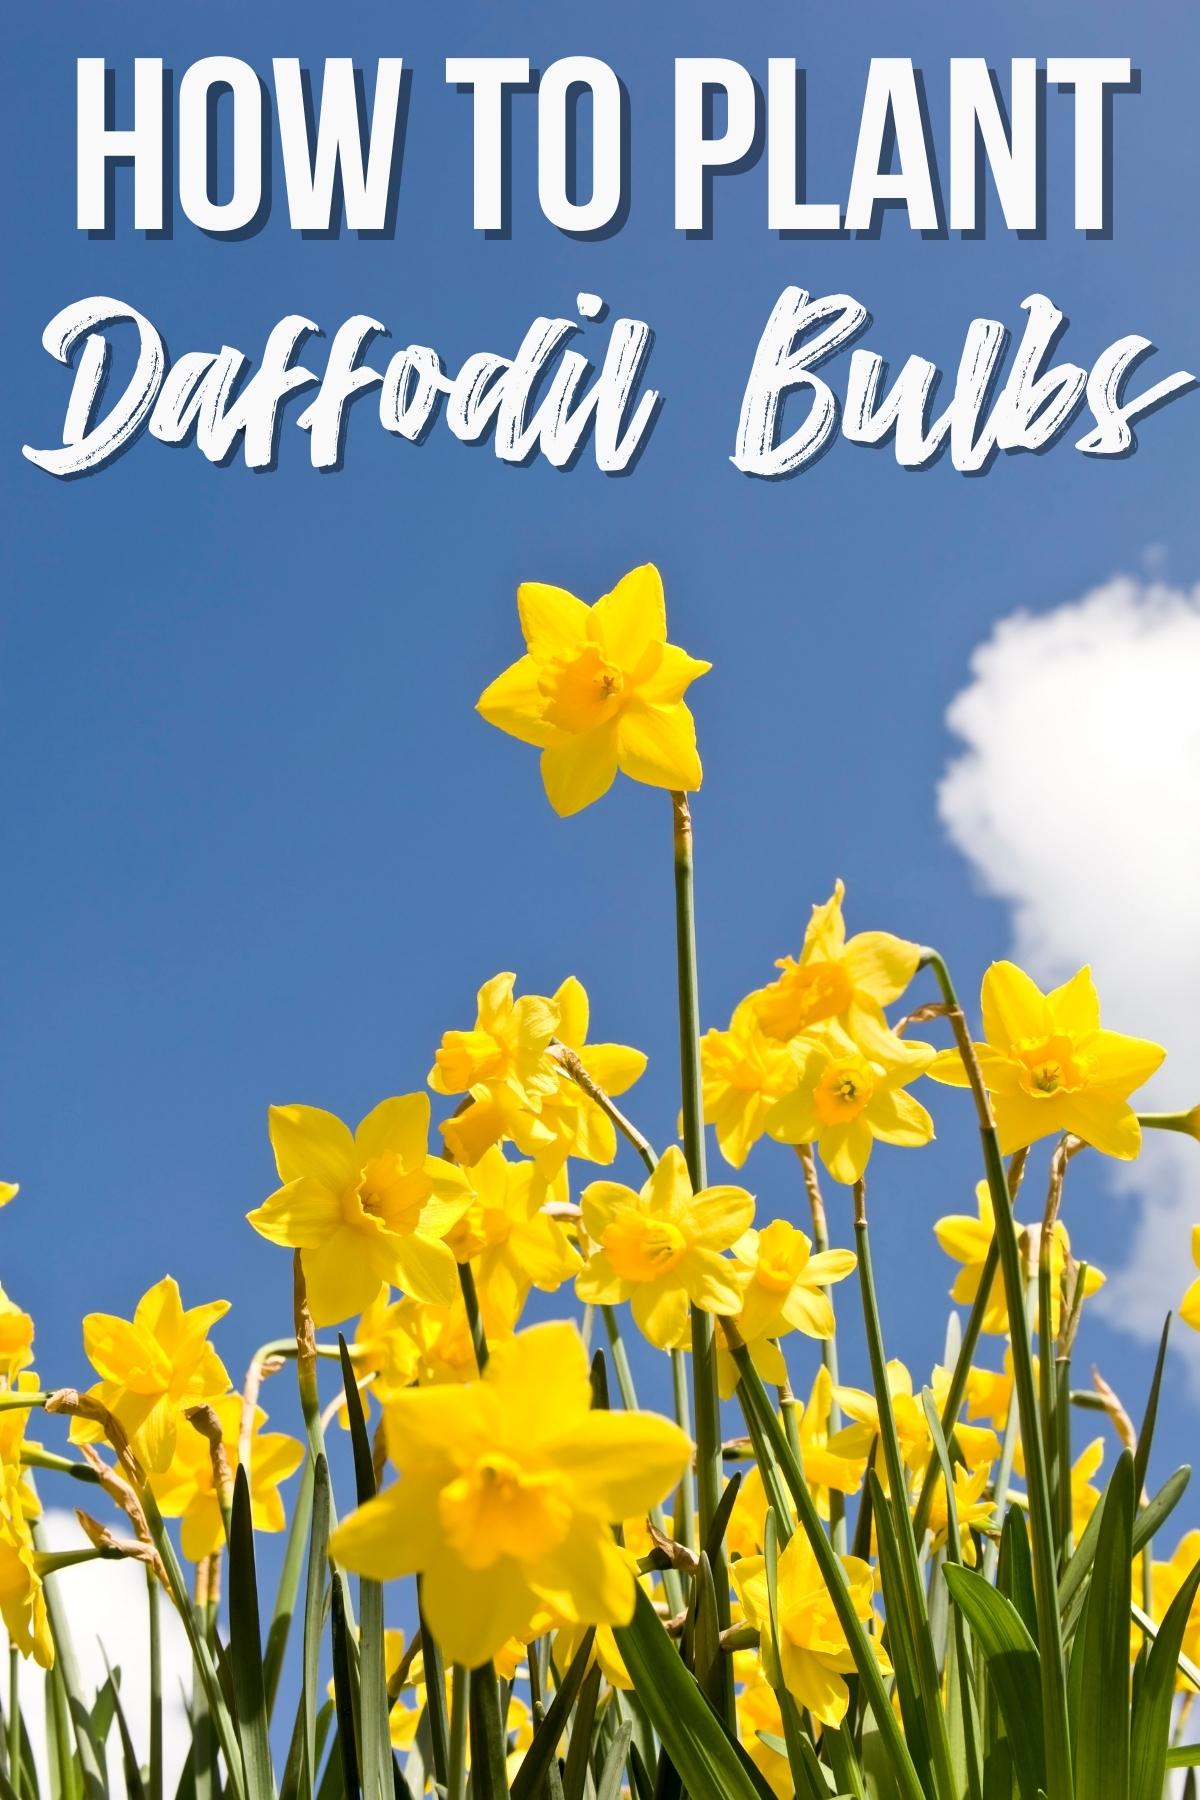 How to plant daffodil bulbs